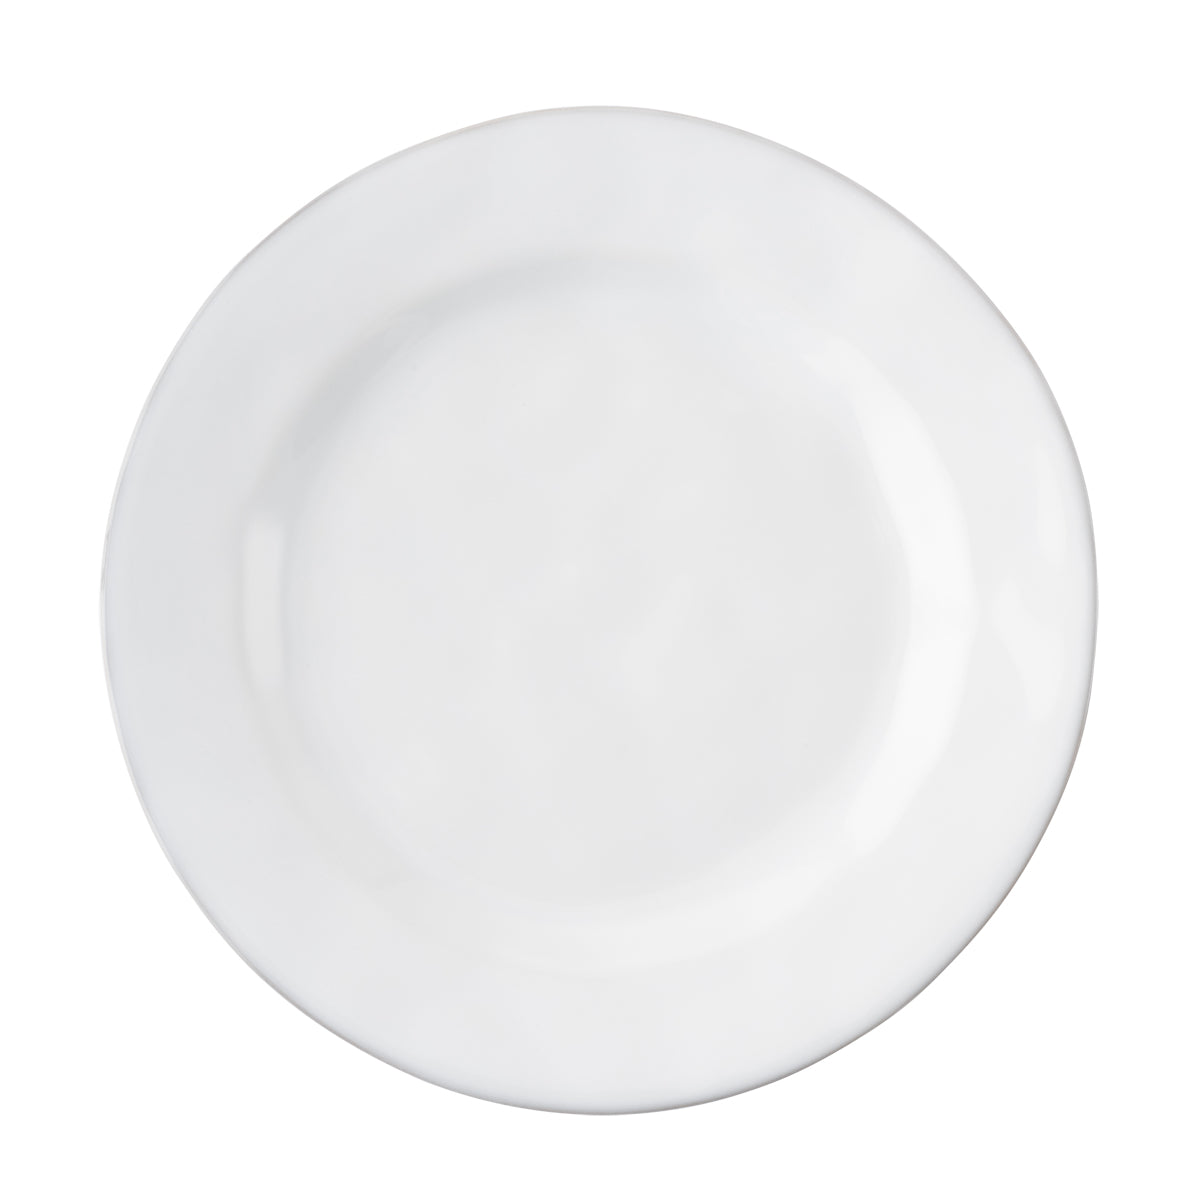 Juliska Quotidien White Truffle Dessert/Salad Plate